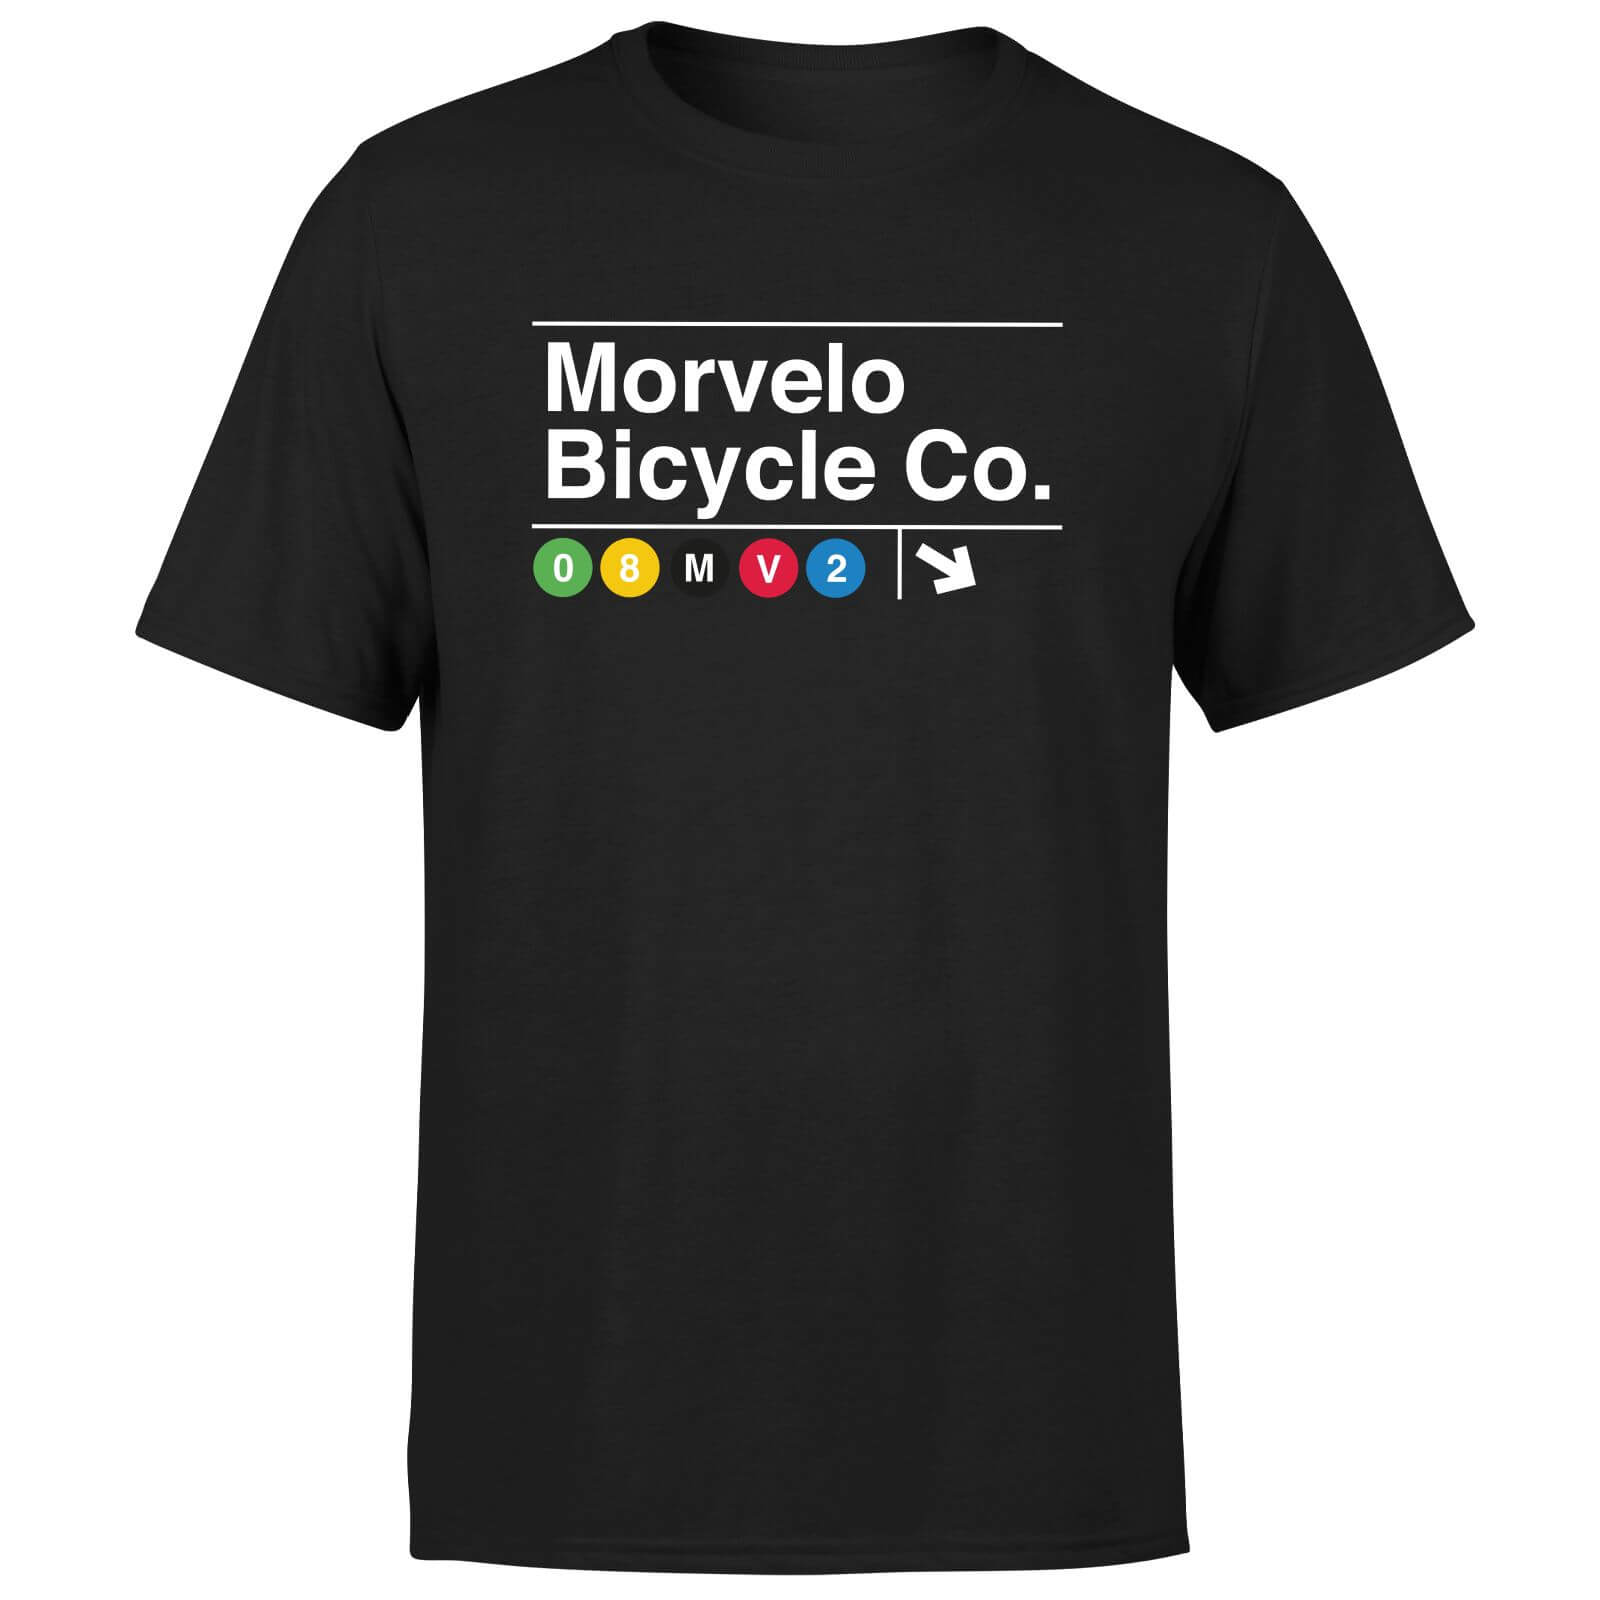 Morvelo NYC Men's T-Shirt - Black - 4XL - Black